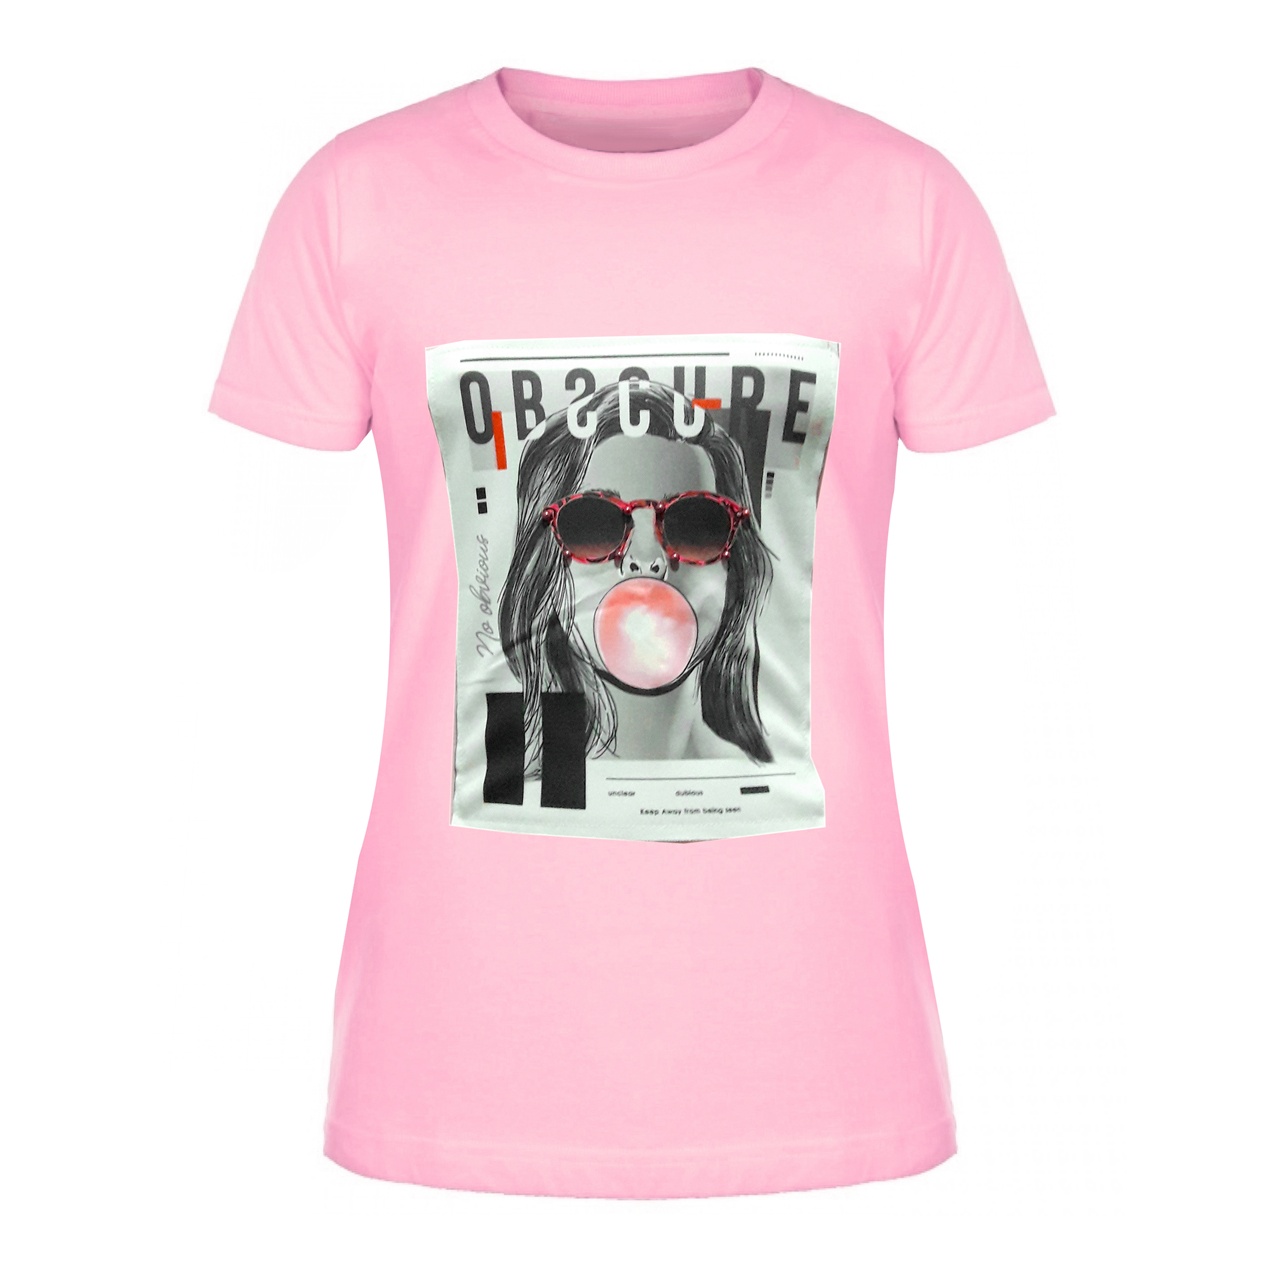 تی شرت زنانه مدل Obscure رنگ صورتی